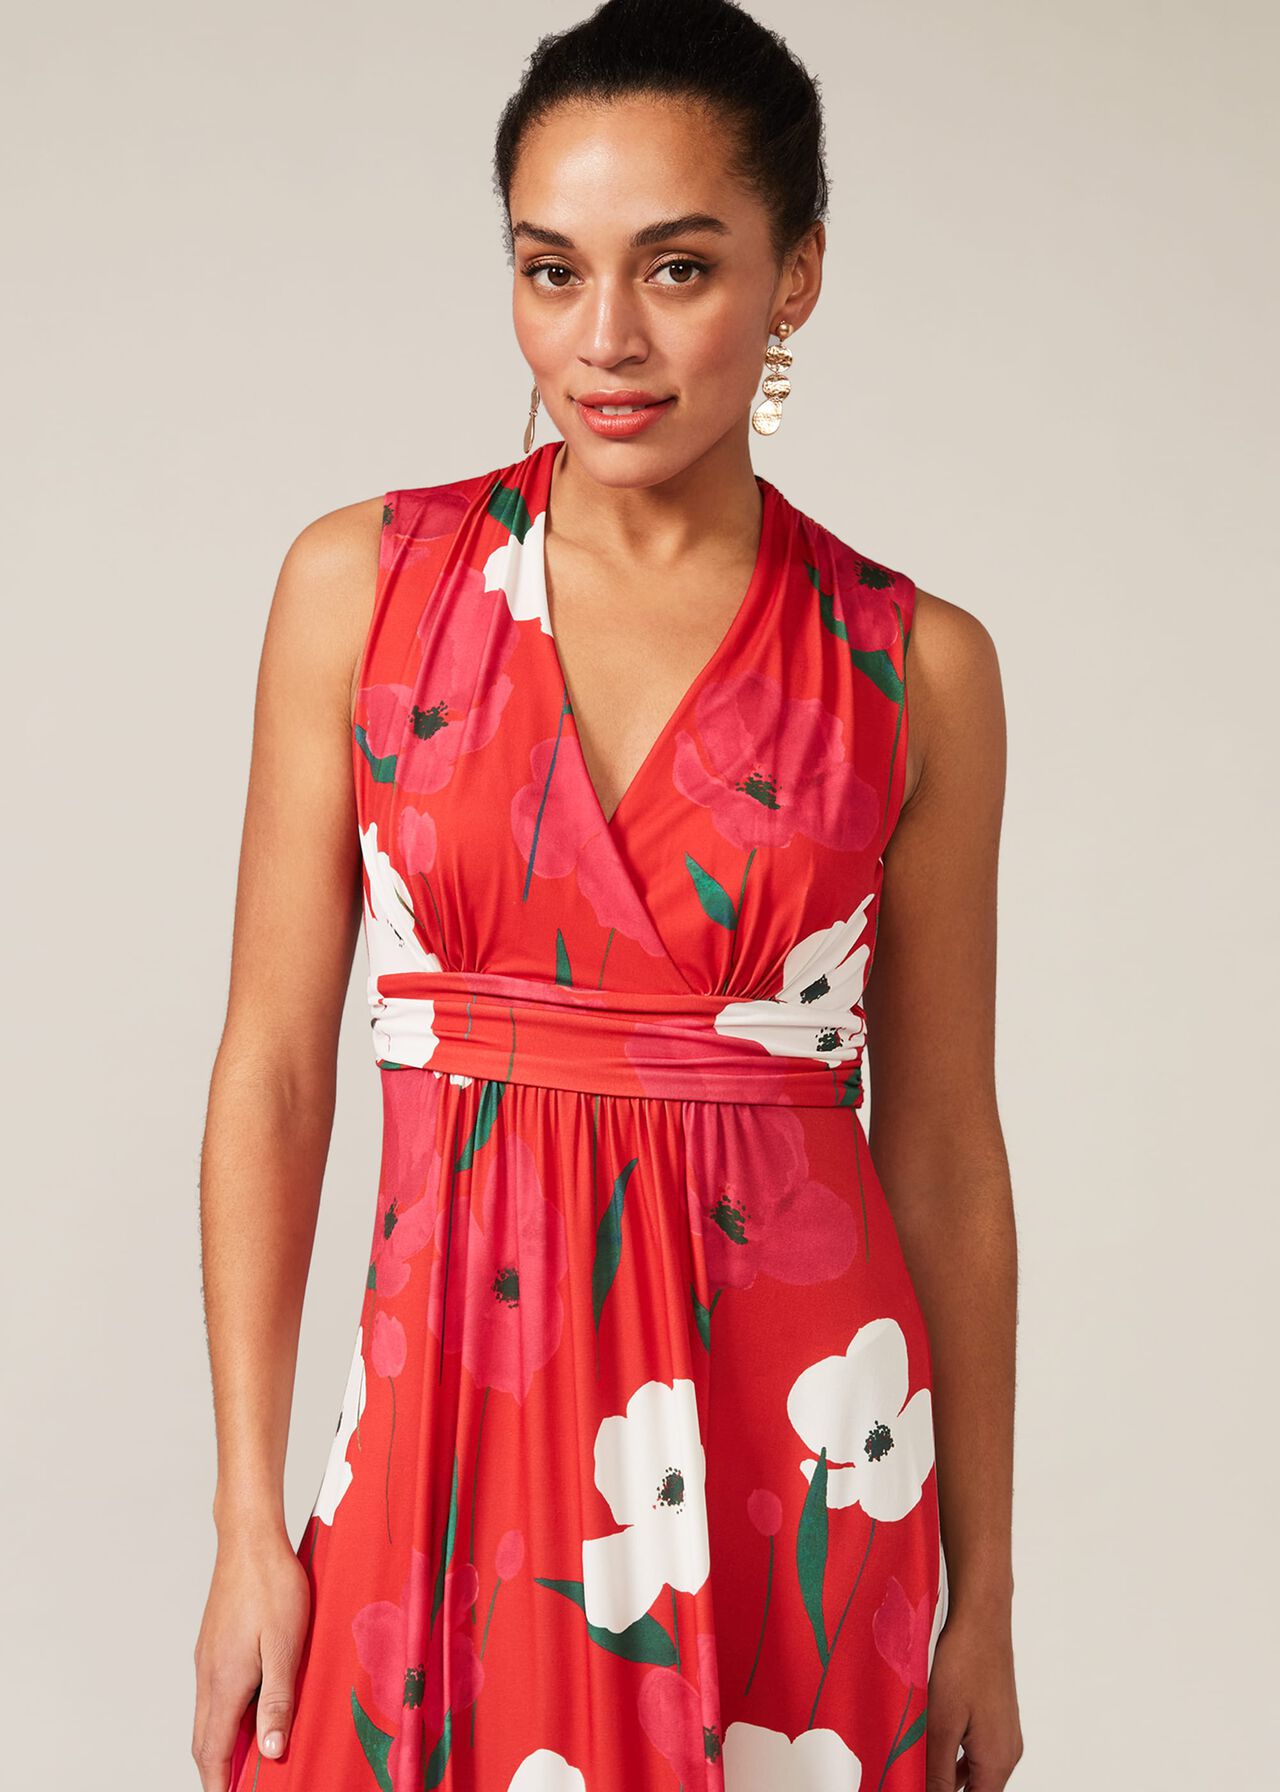 Lou-Poppy Floral Jersey Maxi Dress